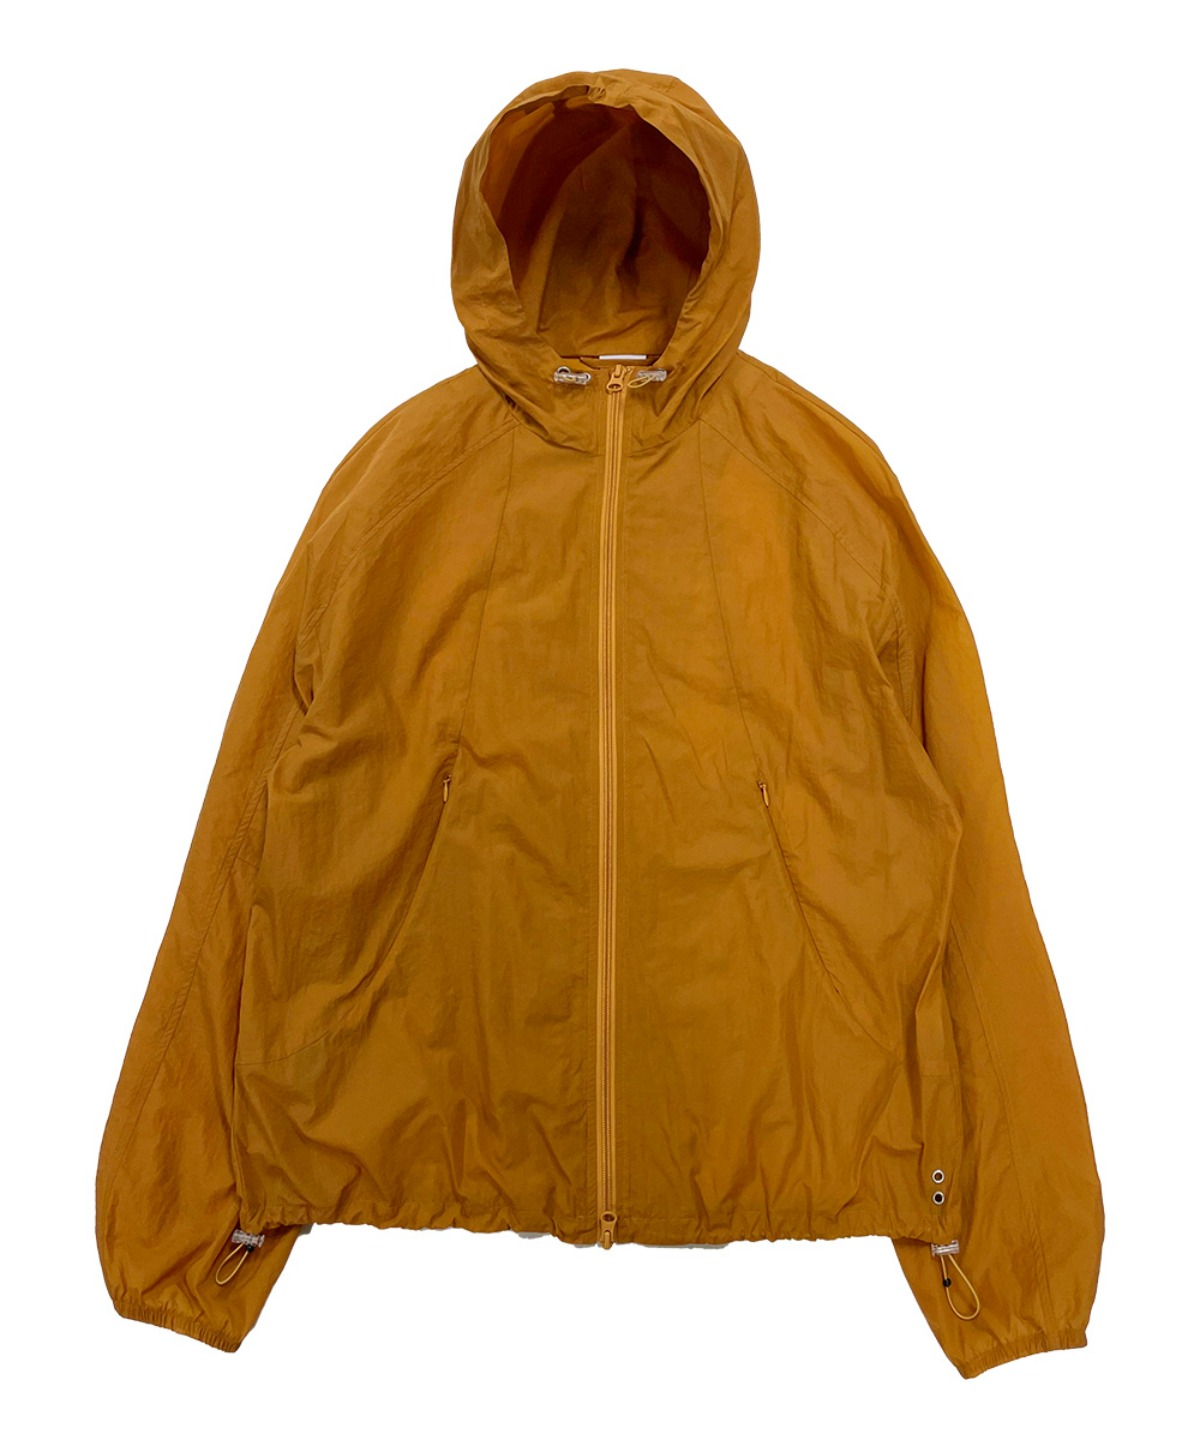 THE COLDEST MOMENT더콜디스트모먼트 TCM easy windstopper jacket (orange)